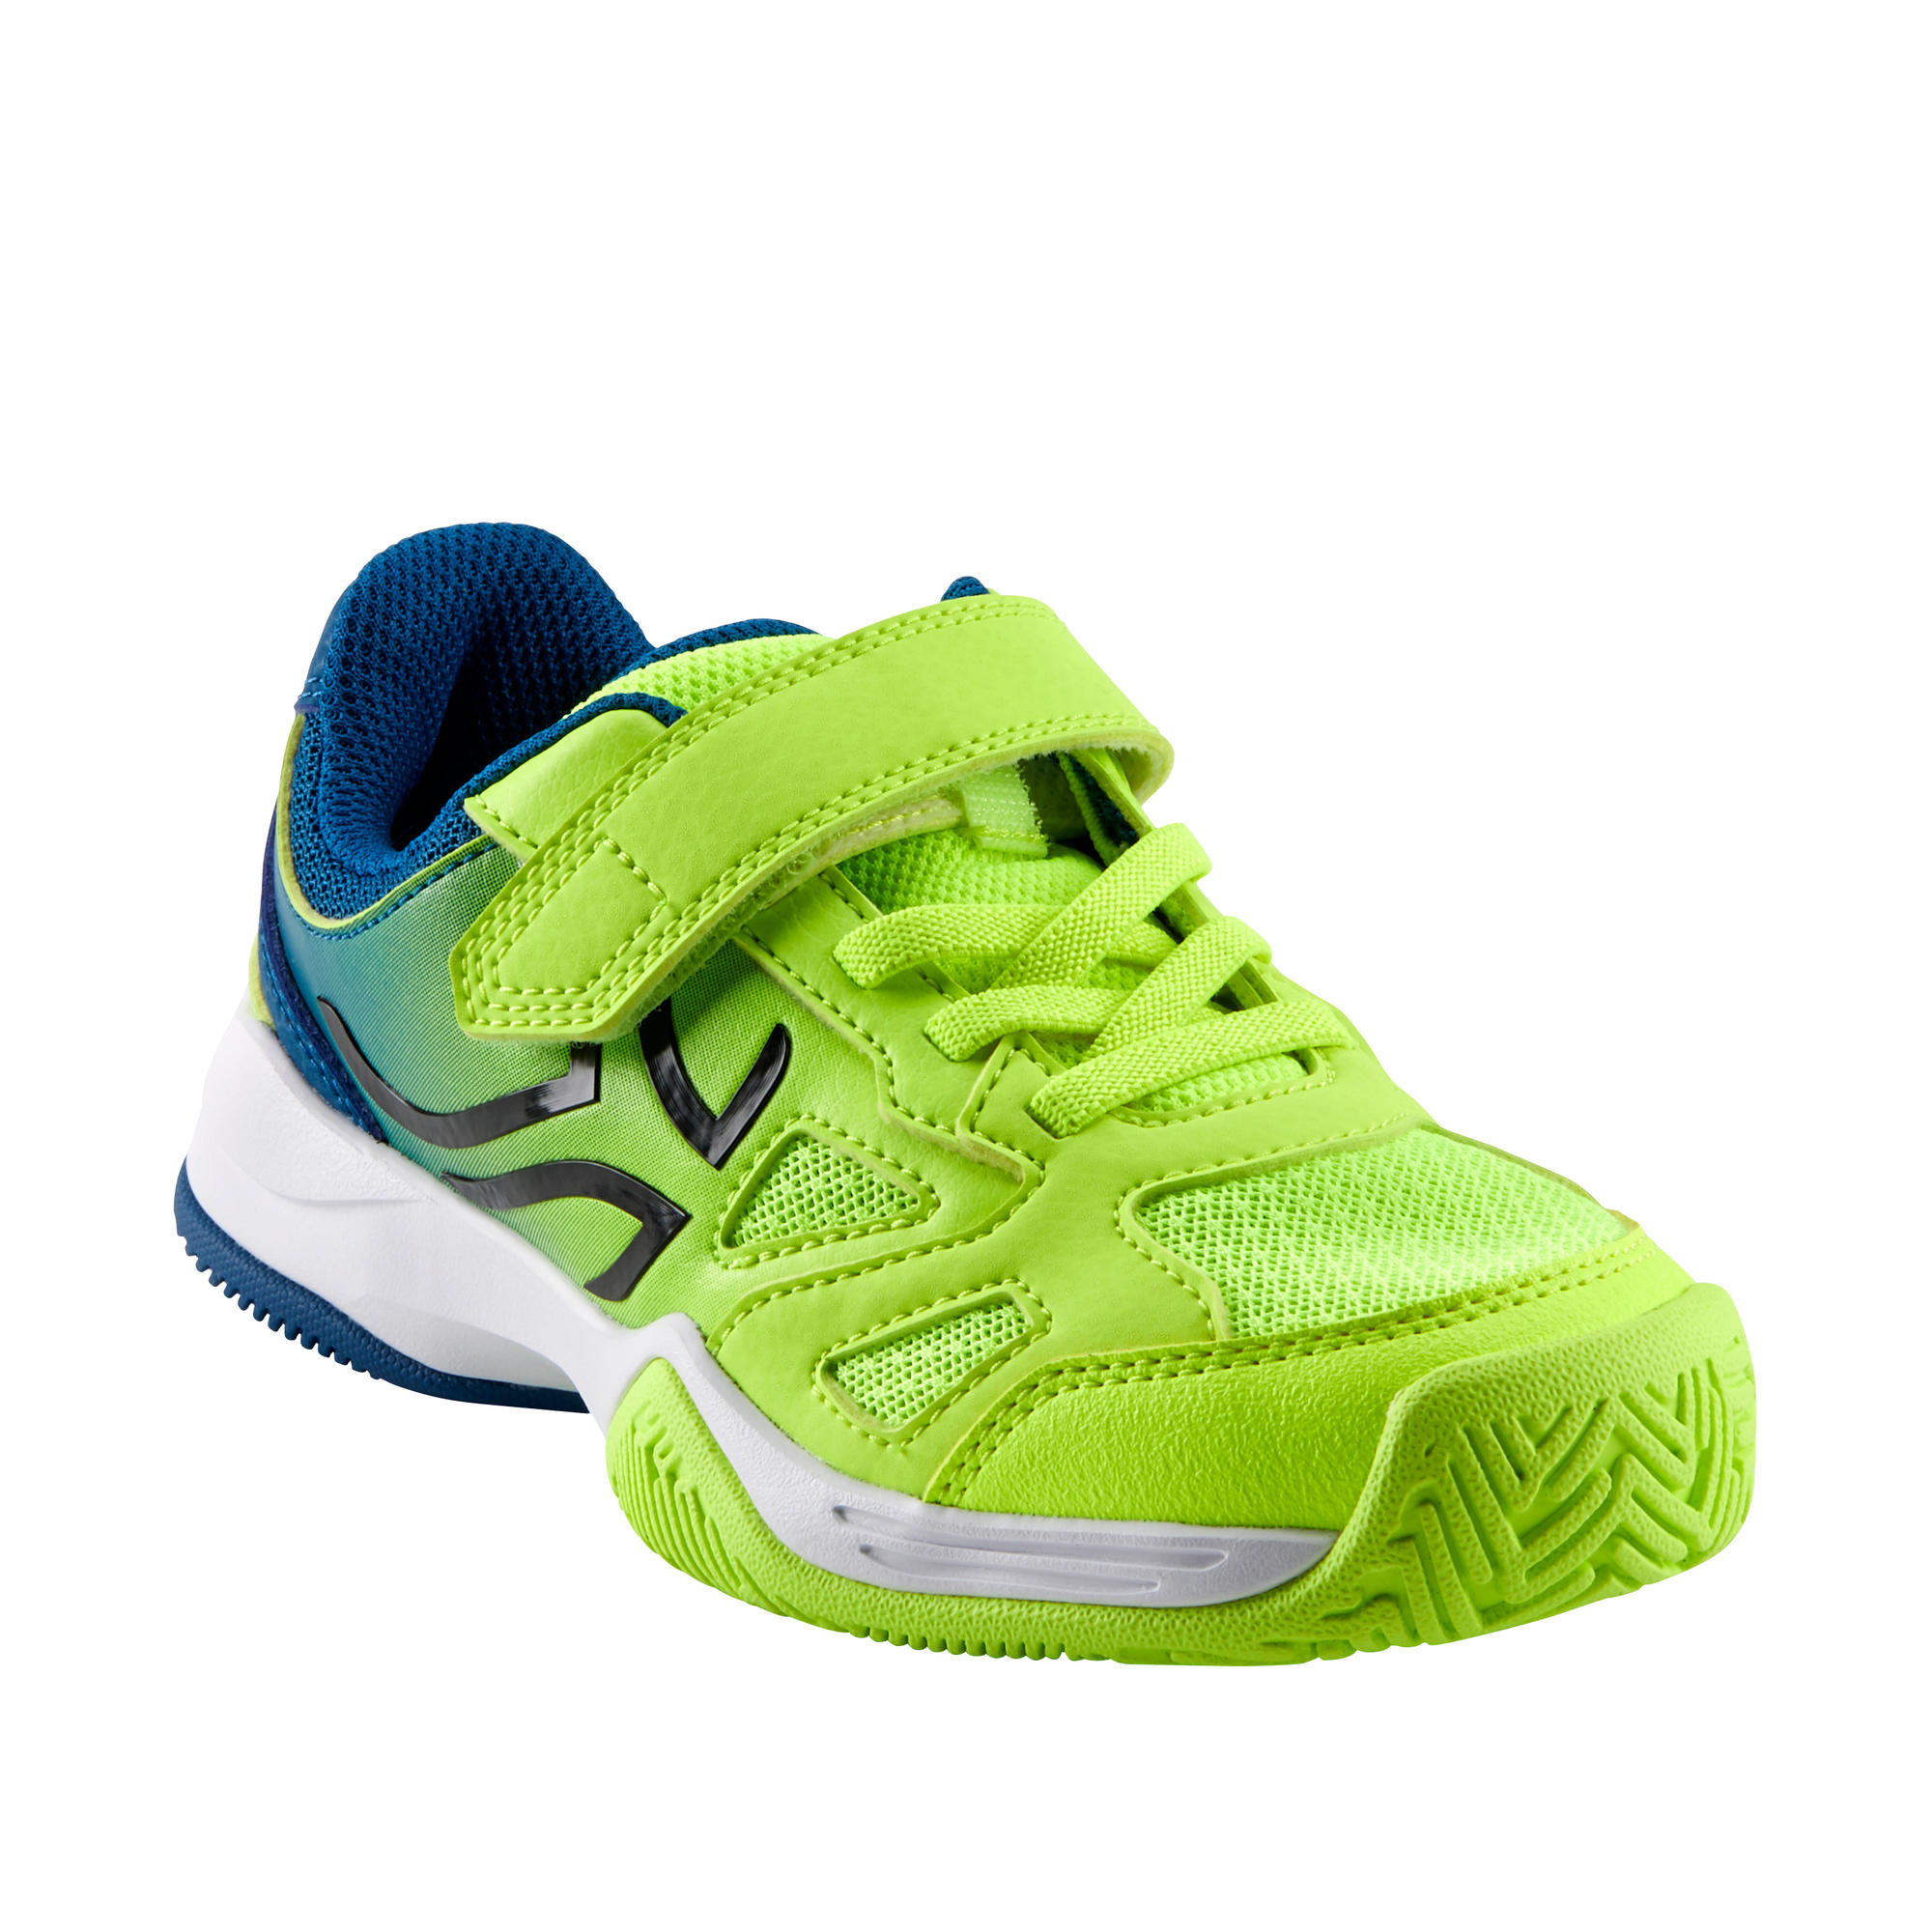 kd tennis shoes